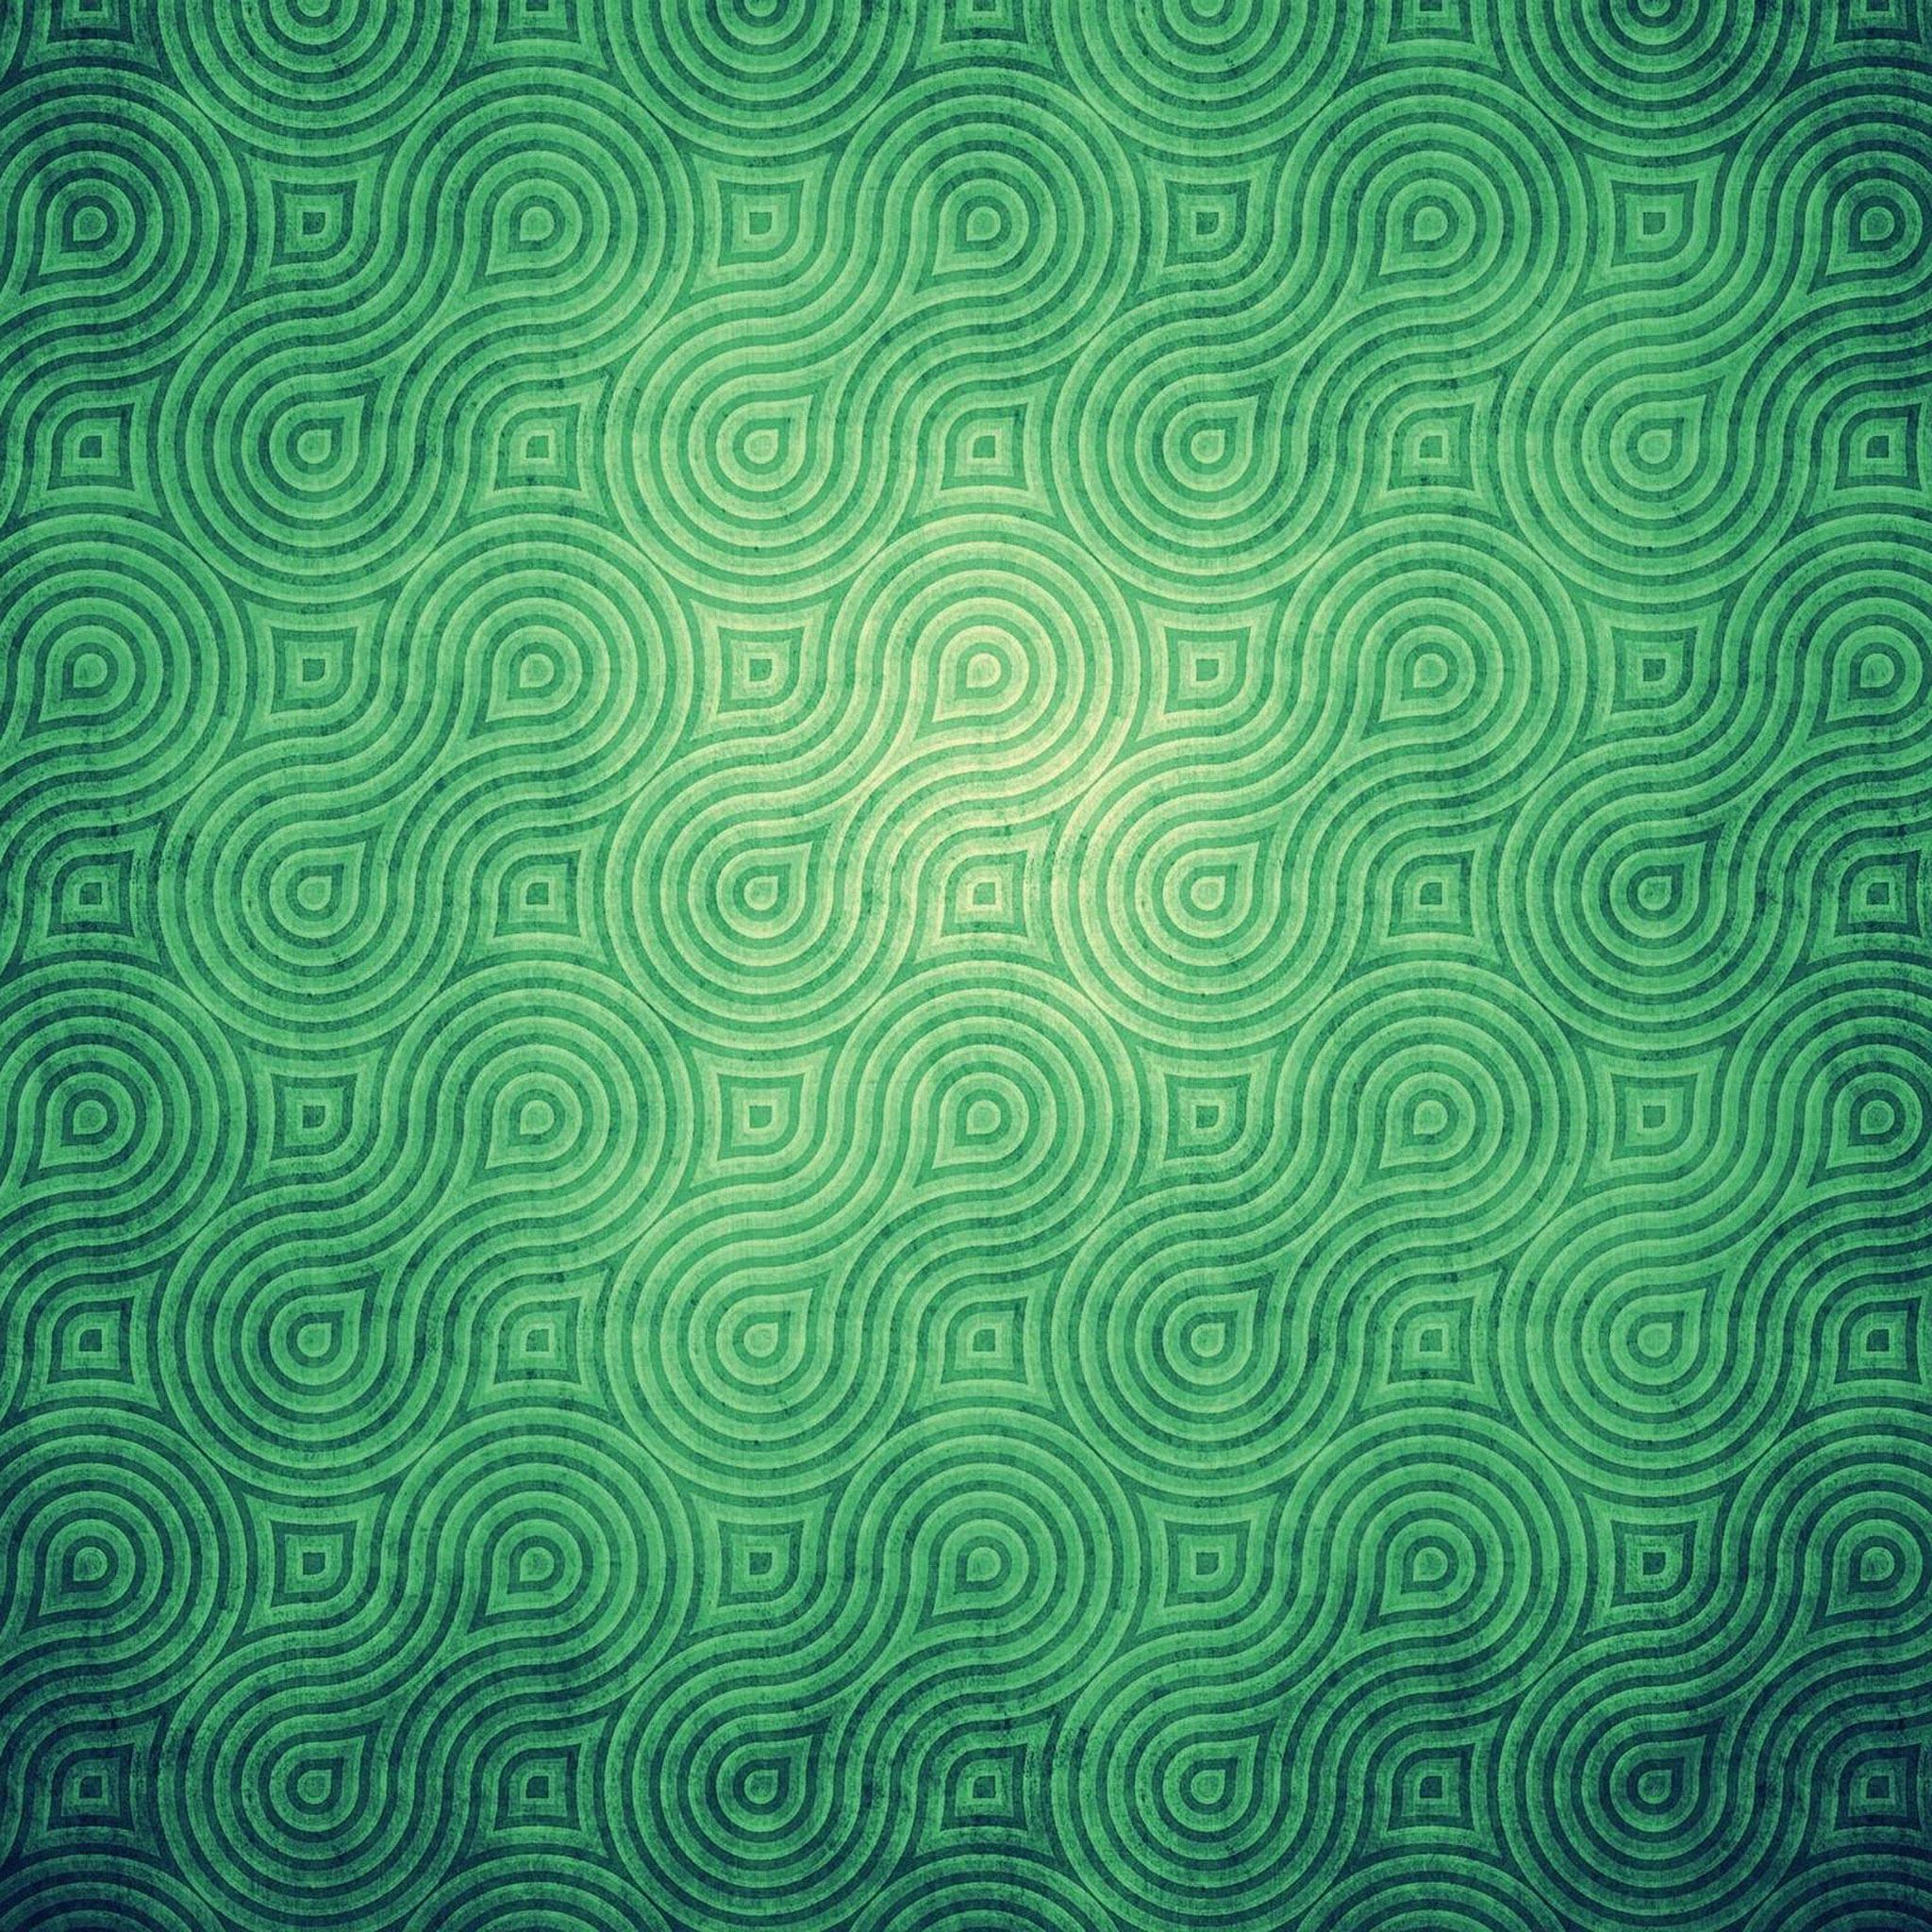 Abstract Green Swirl Vortex Pattern iPad Air Wallpaper Free Download